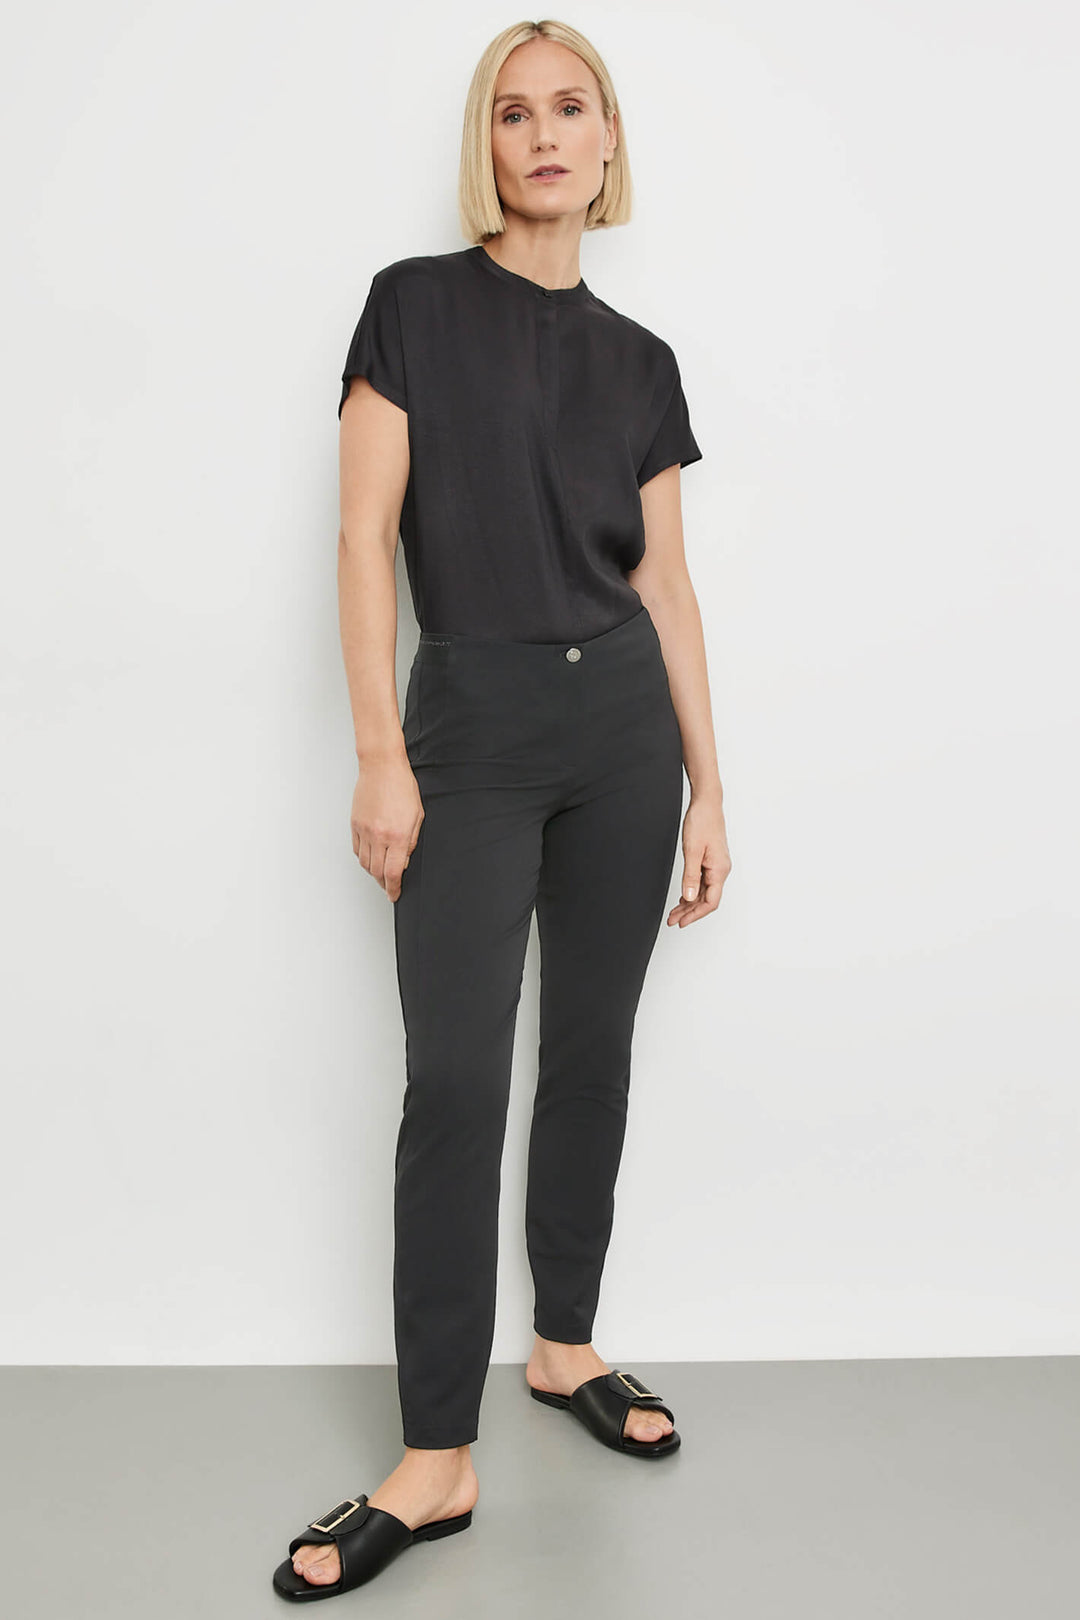 Gerry Weber 925039 Black Slim Fit Trousers - Experience Boutique